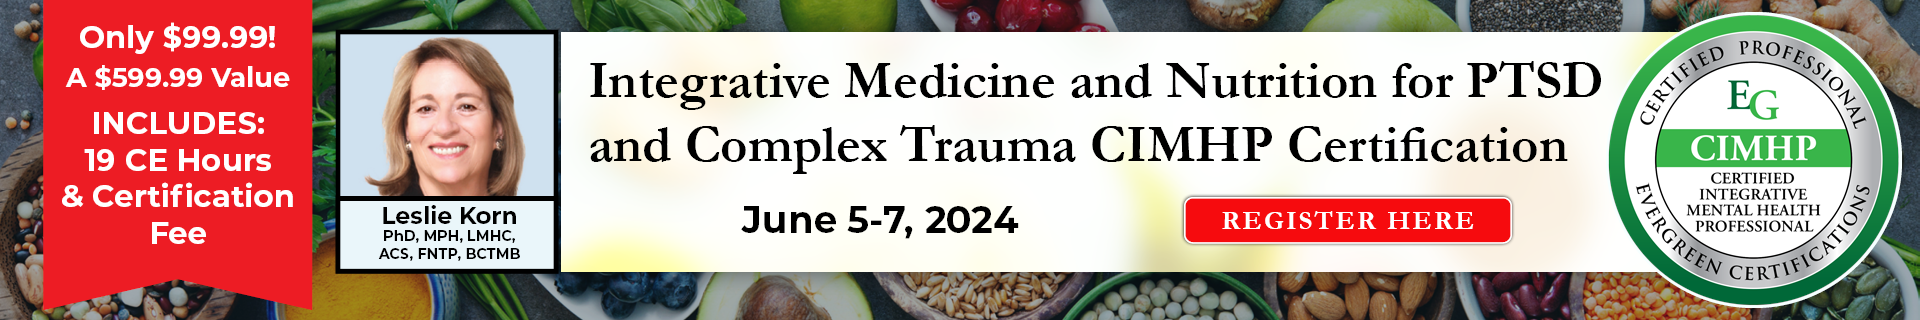 Integrative Medicine and Nutrition for PTSD and Complex Trauma CIMHP Certification